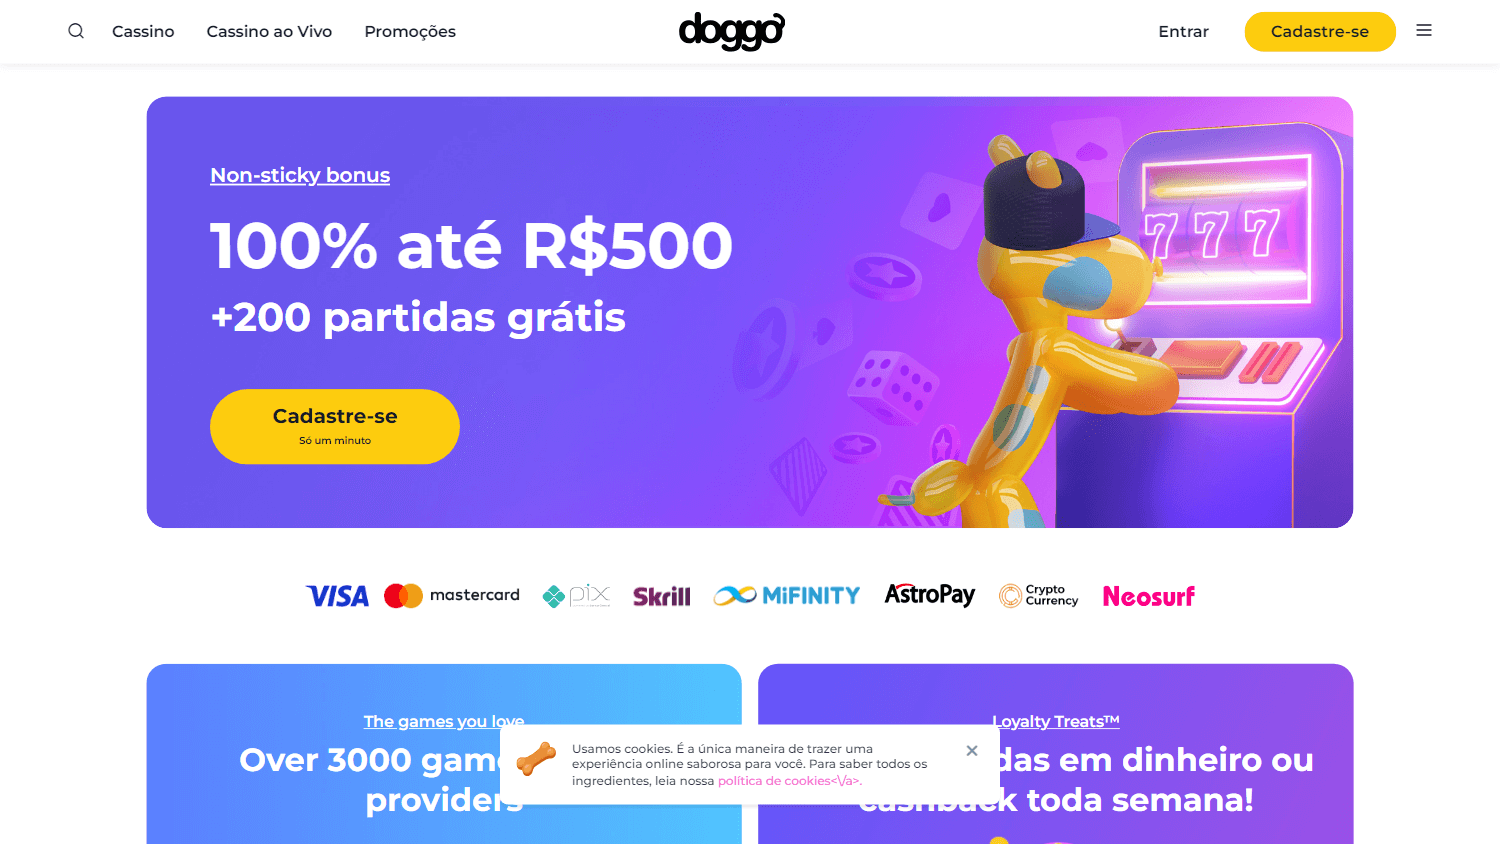 doggo_casino_homepage_desktop